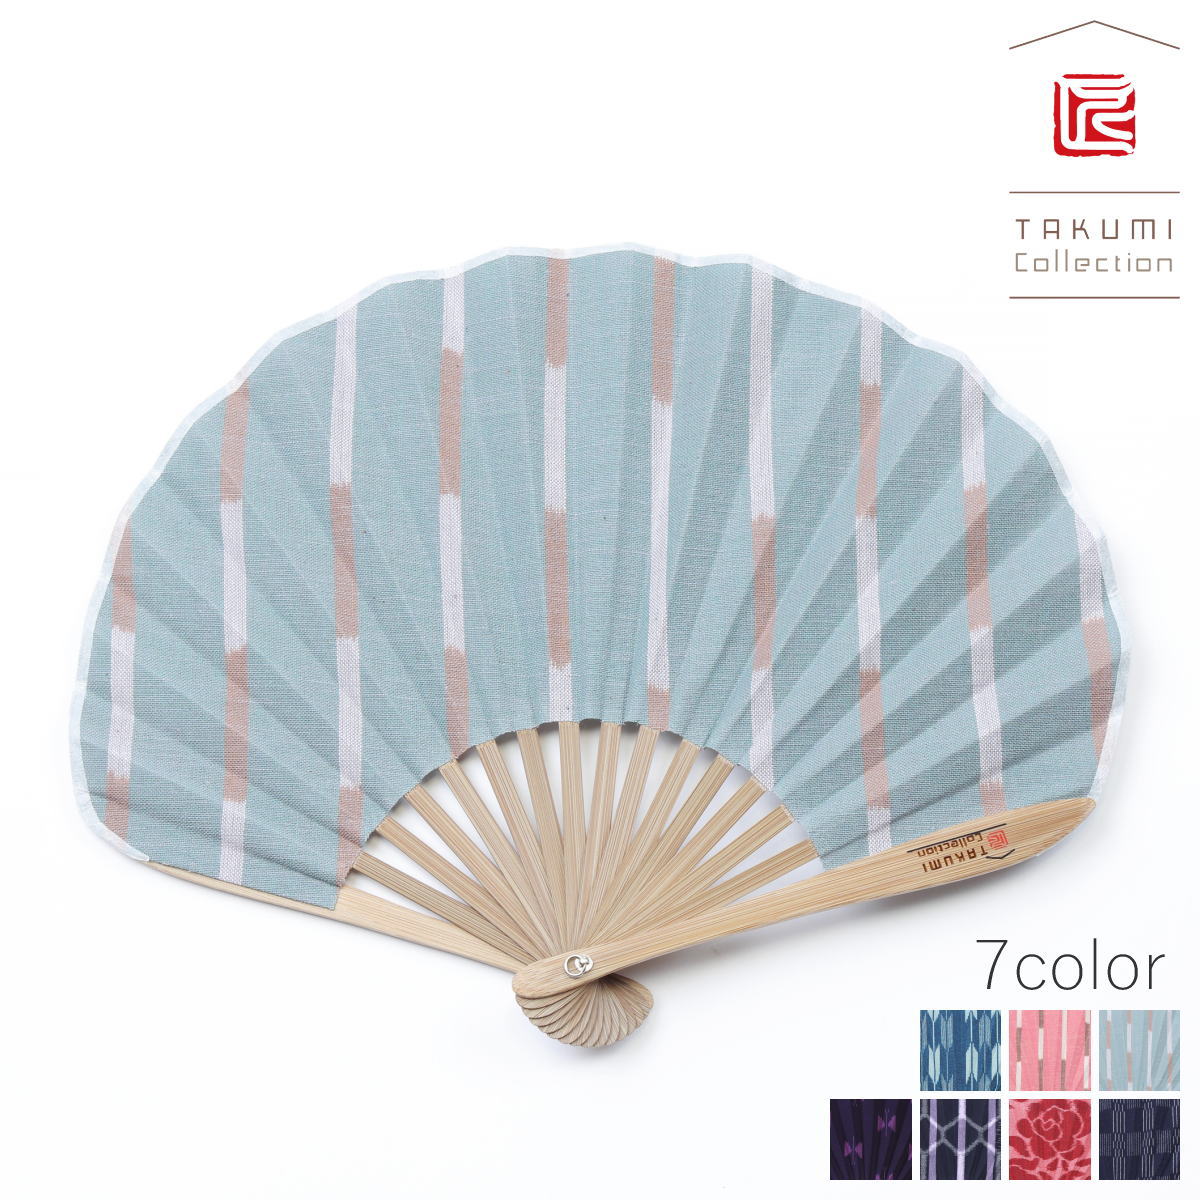 TAKUMI Collection 久留米絣 扇子 貝殻型 7色展開 タクミコレクション 和装 敬老...